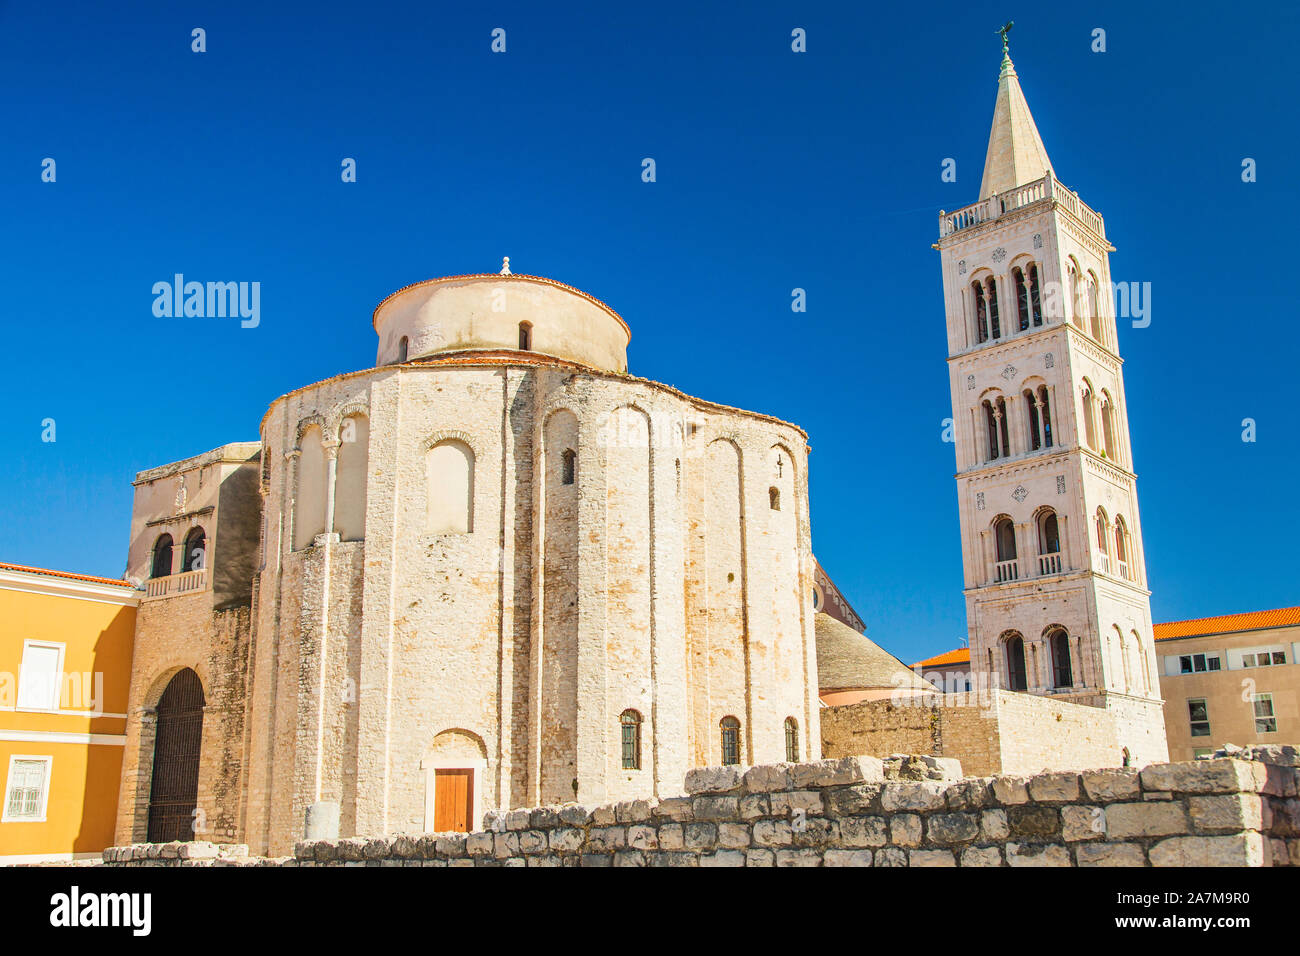 Saint Donatus church from 9th century on the historic site of old Roman forum ruins in the city of Zadar in Dalmatia, Croatia Stock Photo